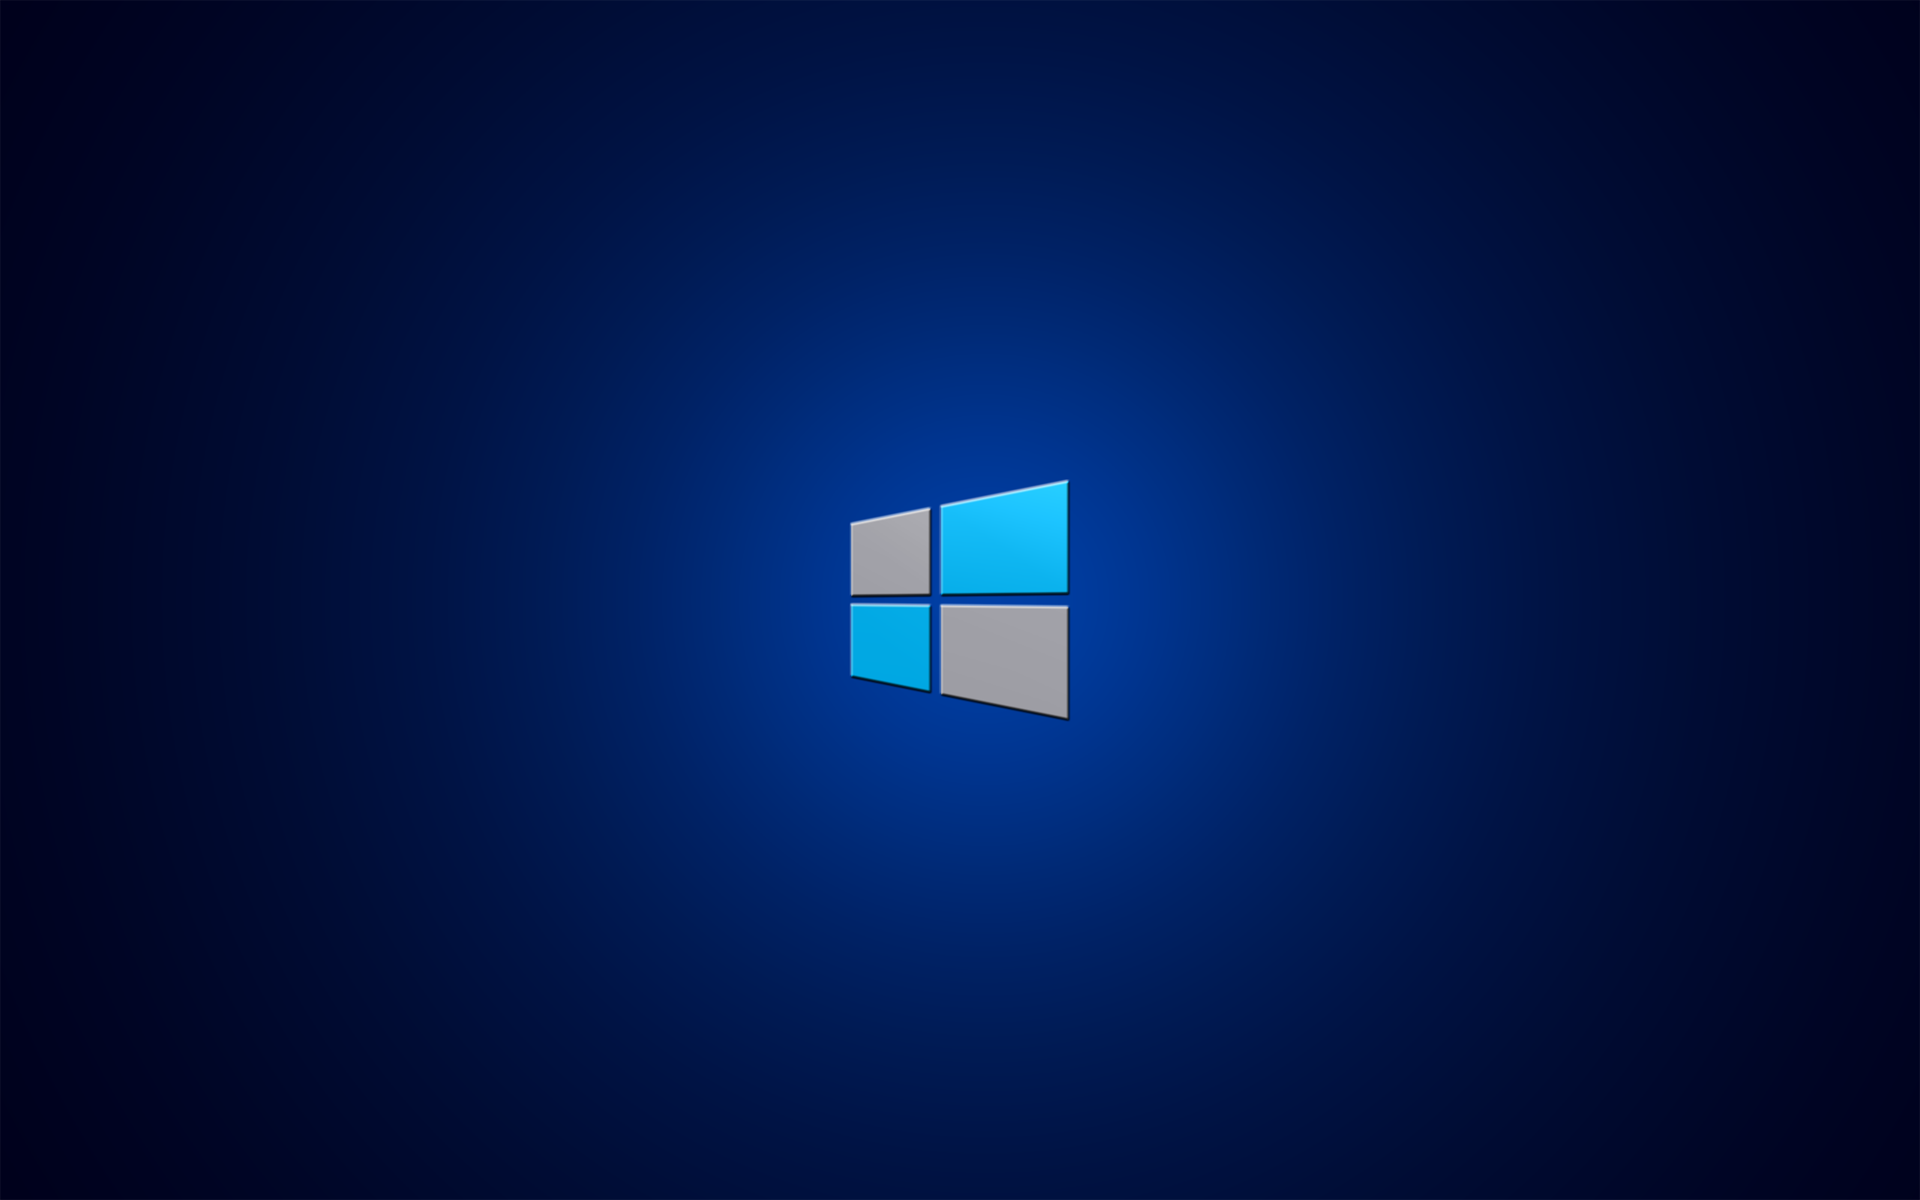 Windows 8 Wallpapers HD - Wallpaper Cave